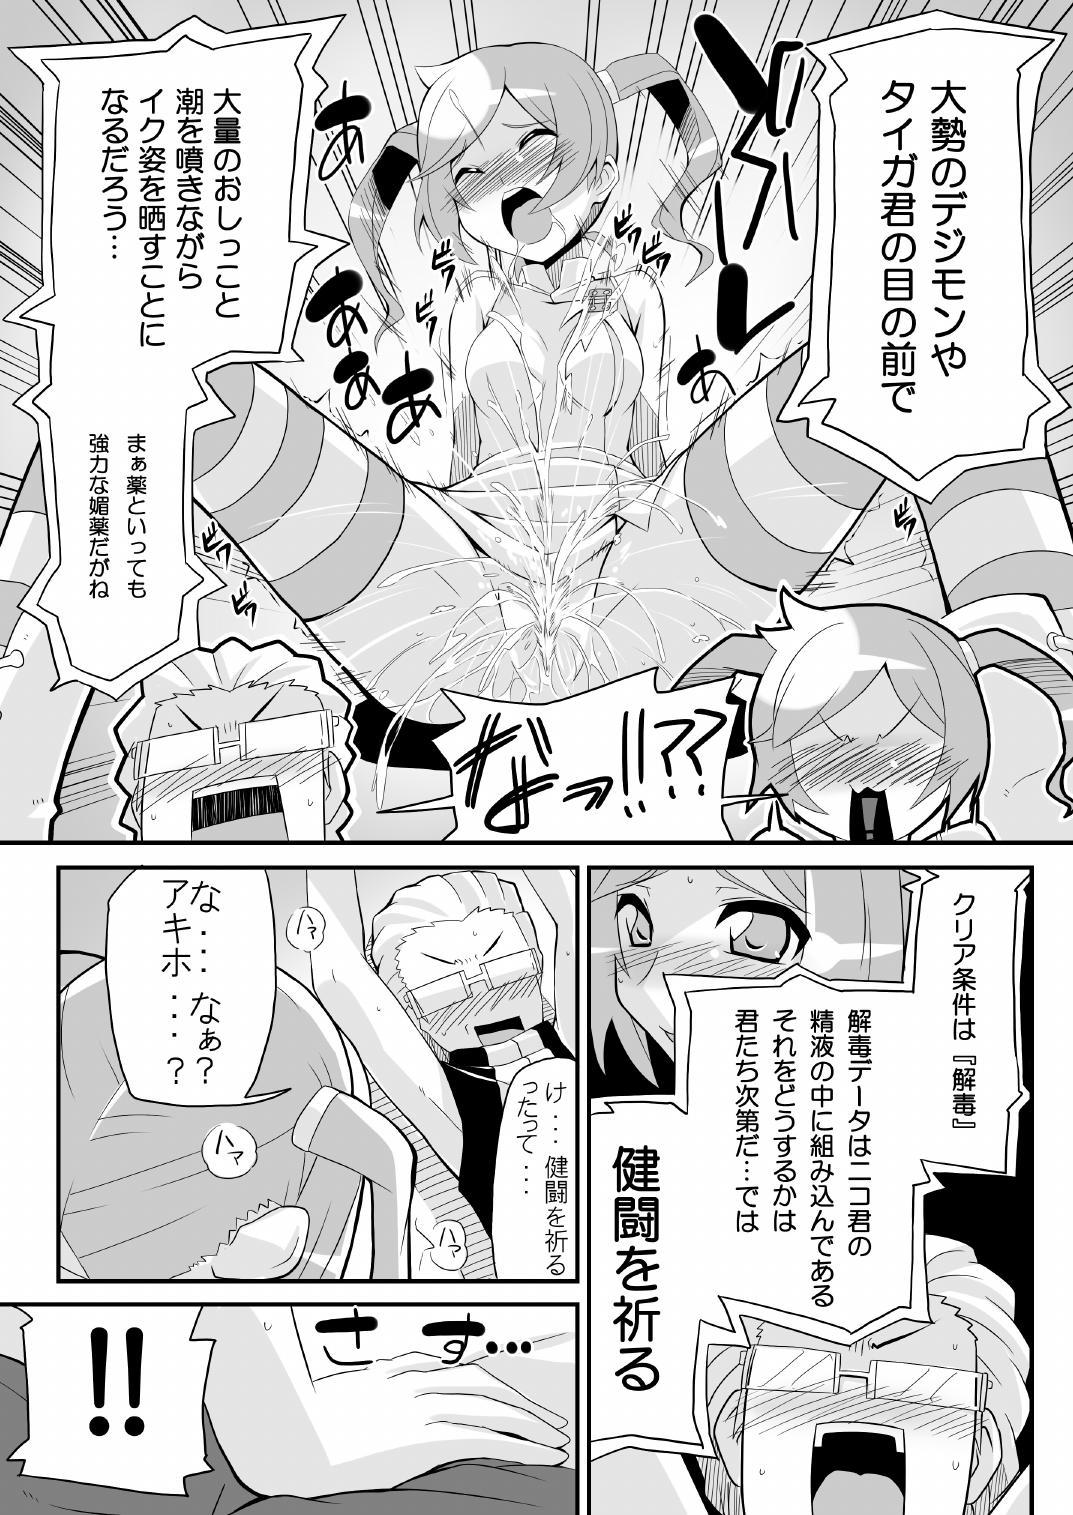 Hetero Re:Akiho/Rinatize Ero - Digimon Cumfacial - Page 5